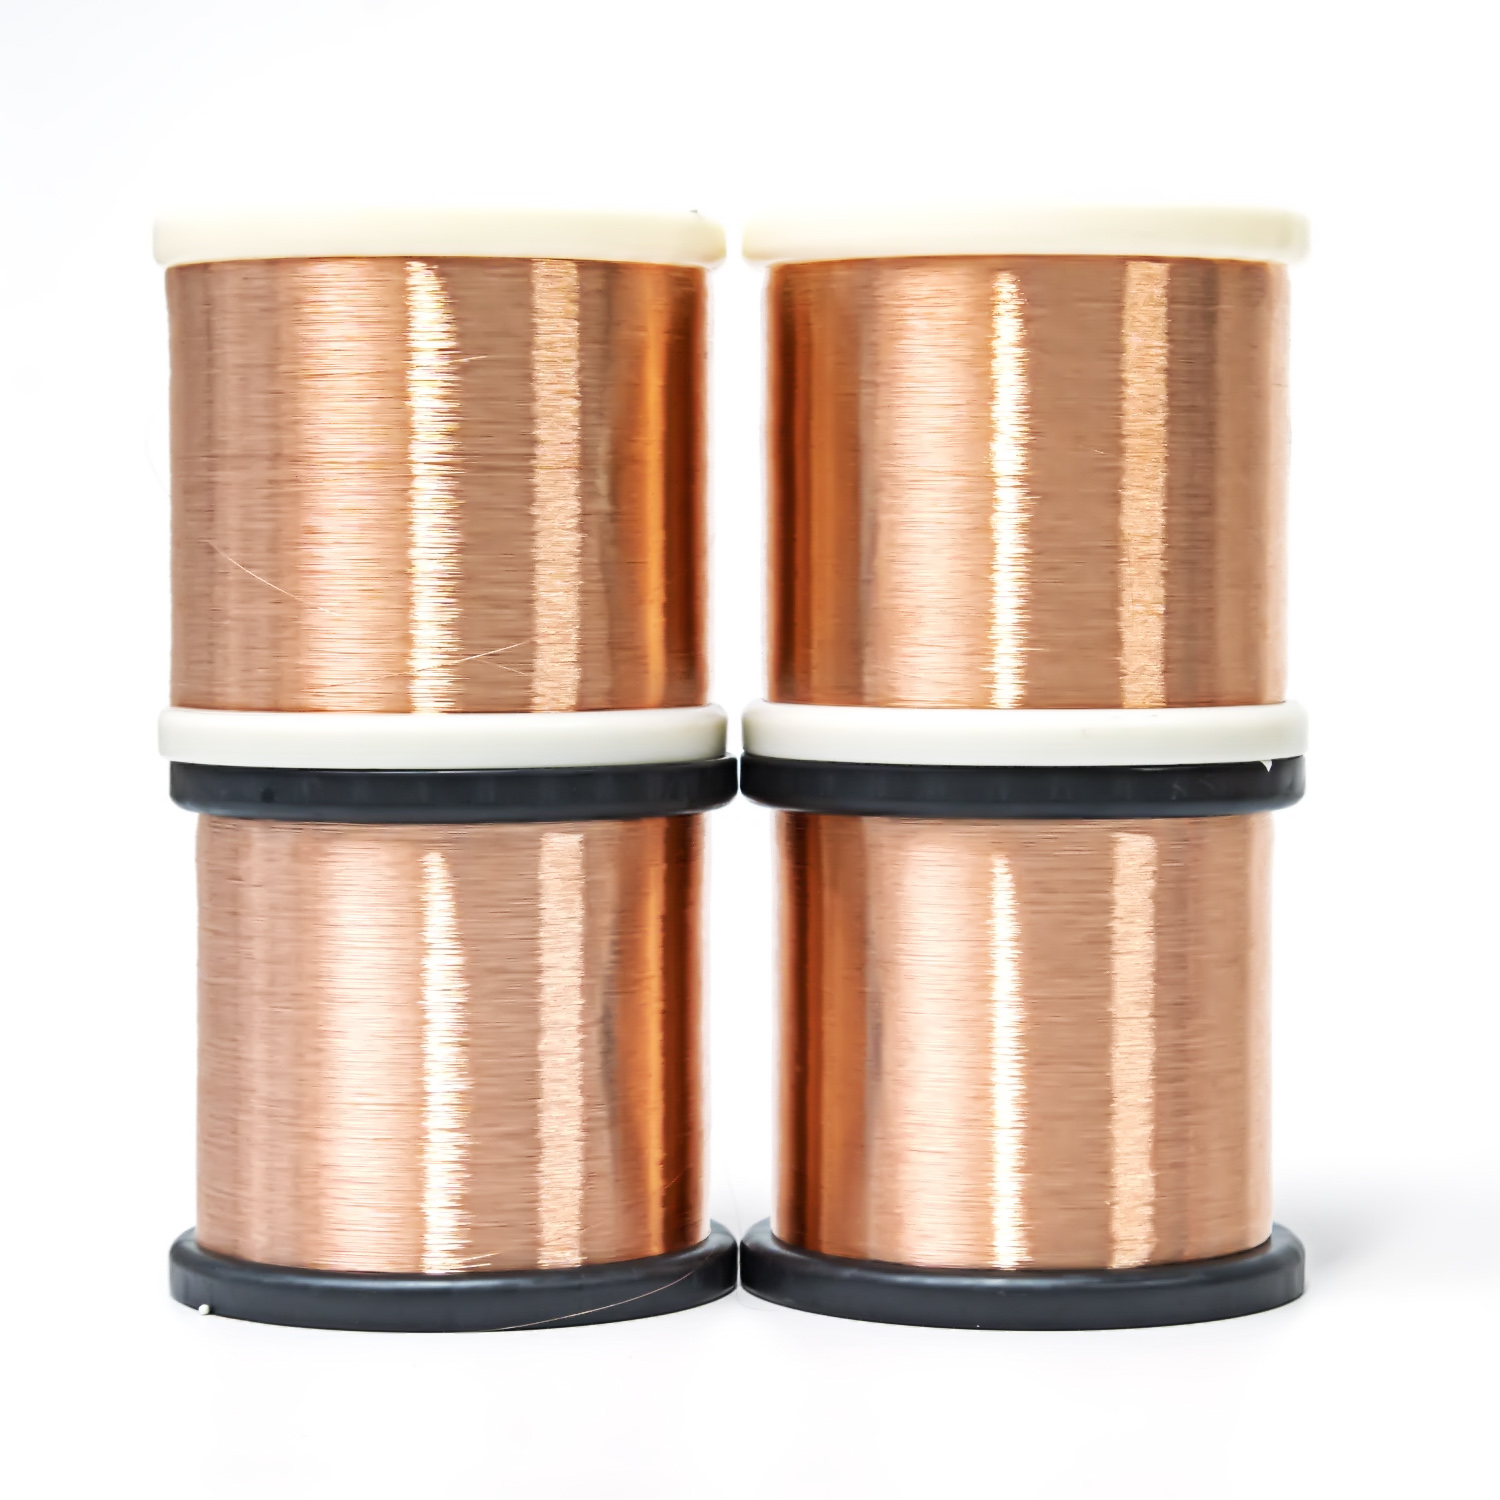 0.15mm annealed bare copper wire